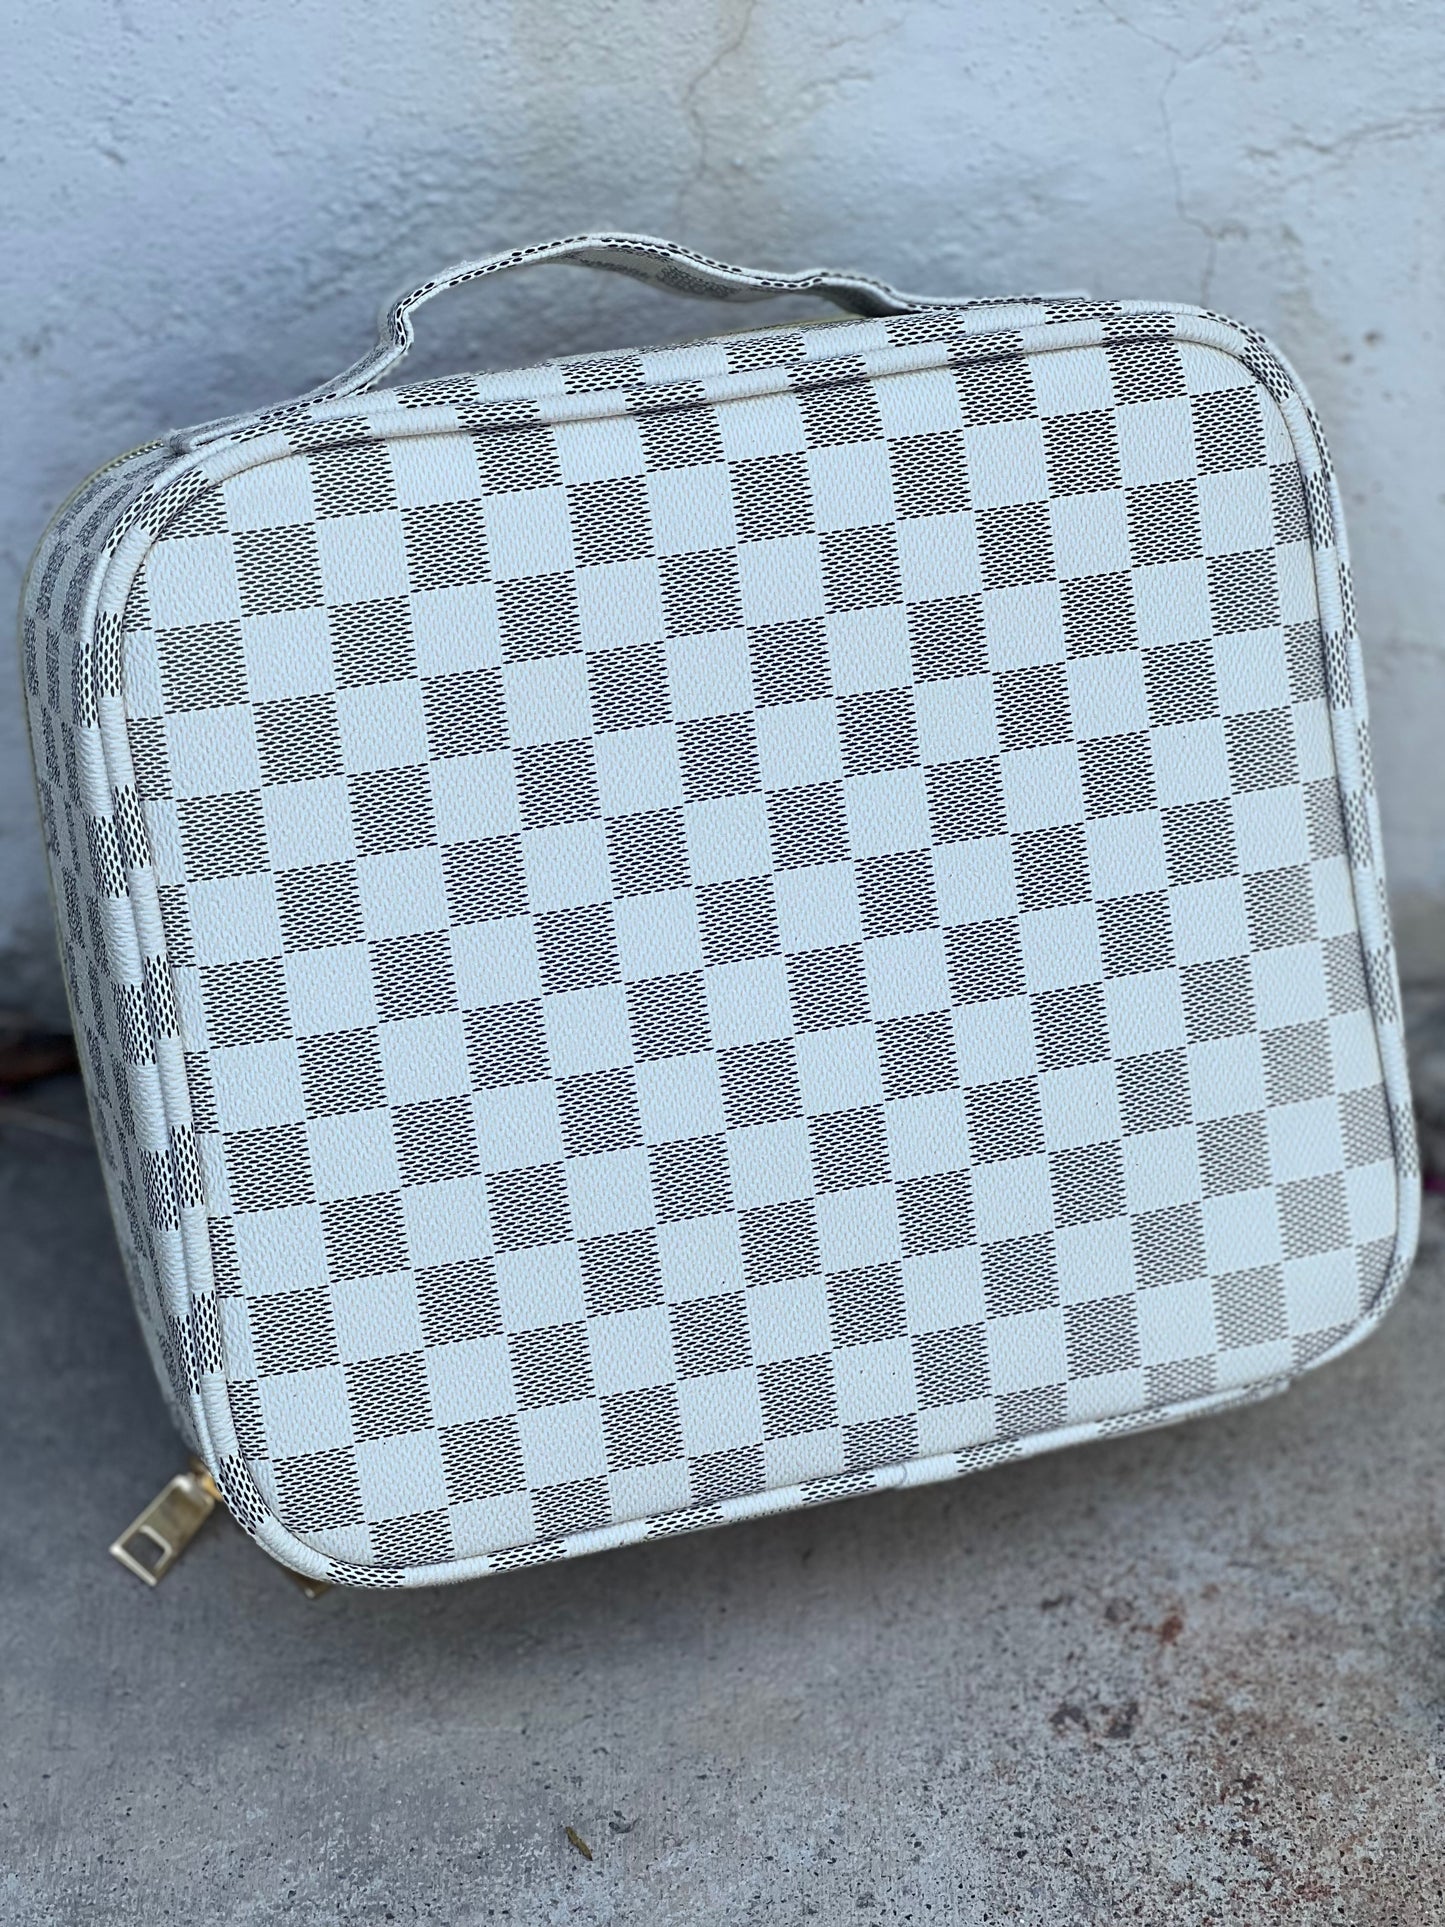 Cream Checkered Cosmetic/Vet Bag #16